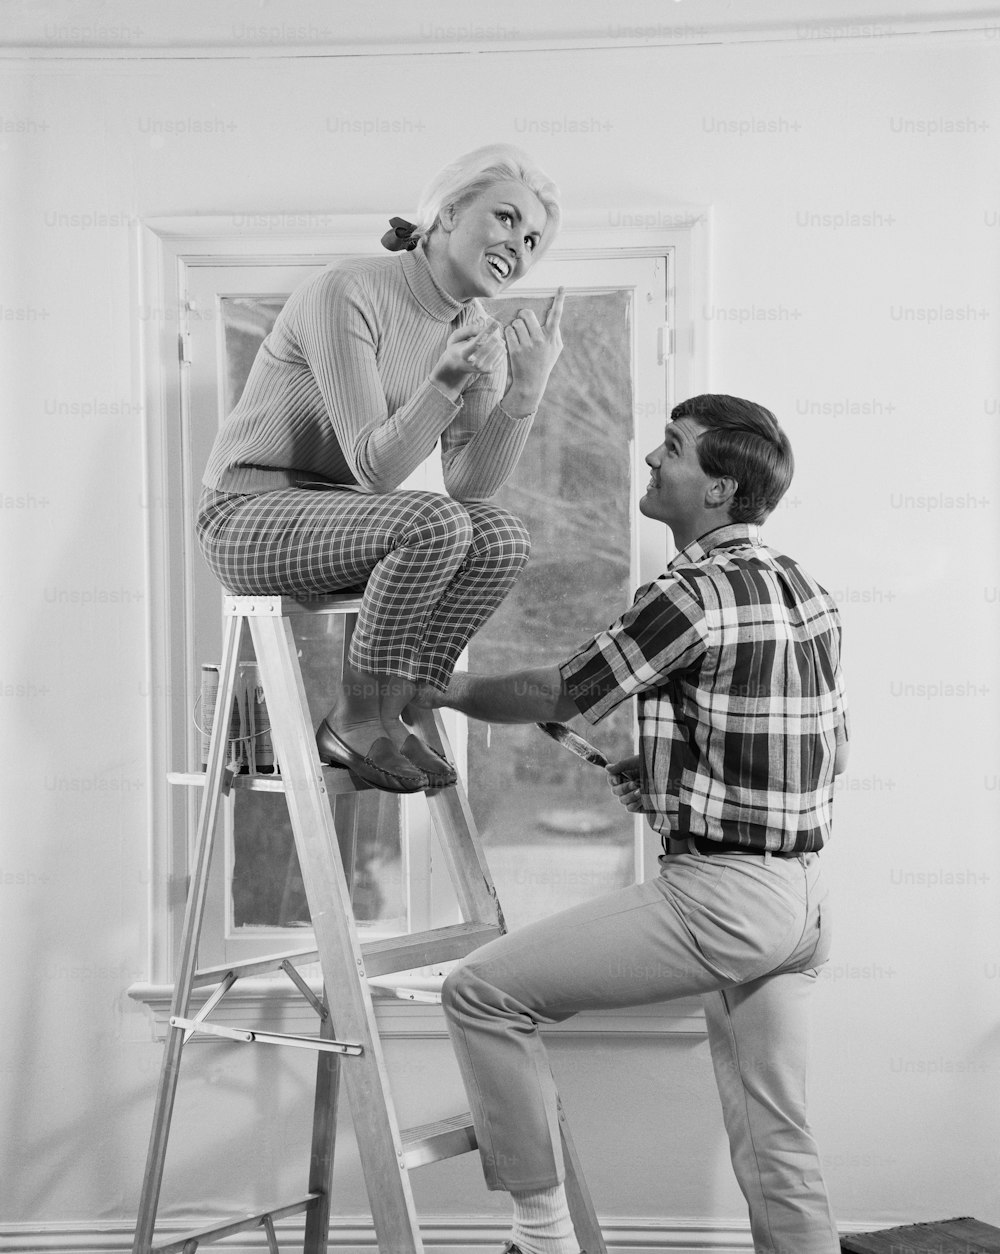 Un uomo in piedi su una scala accanto a una donna